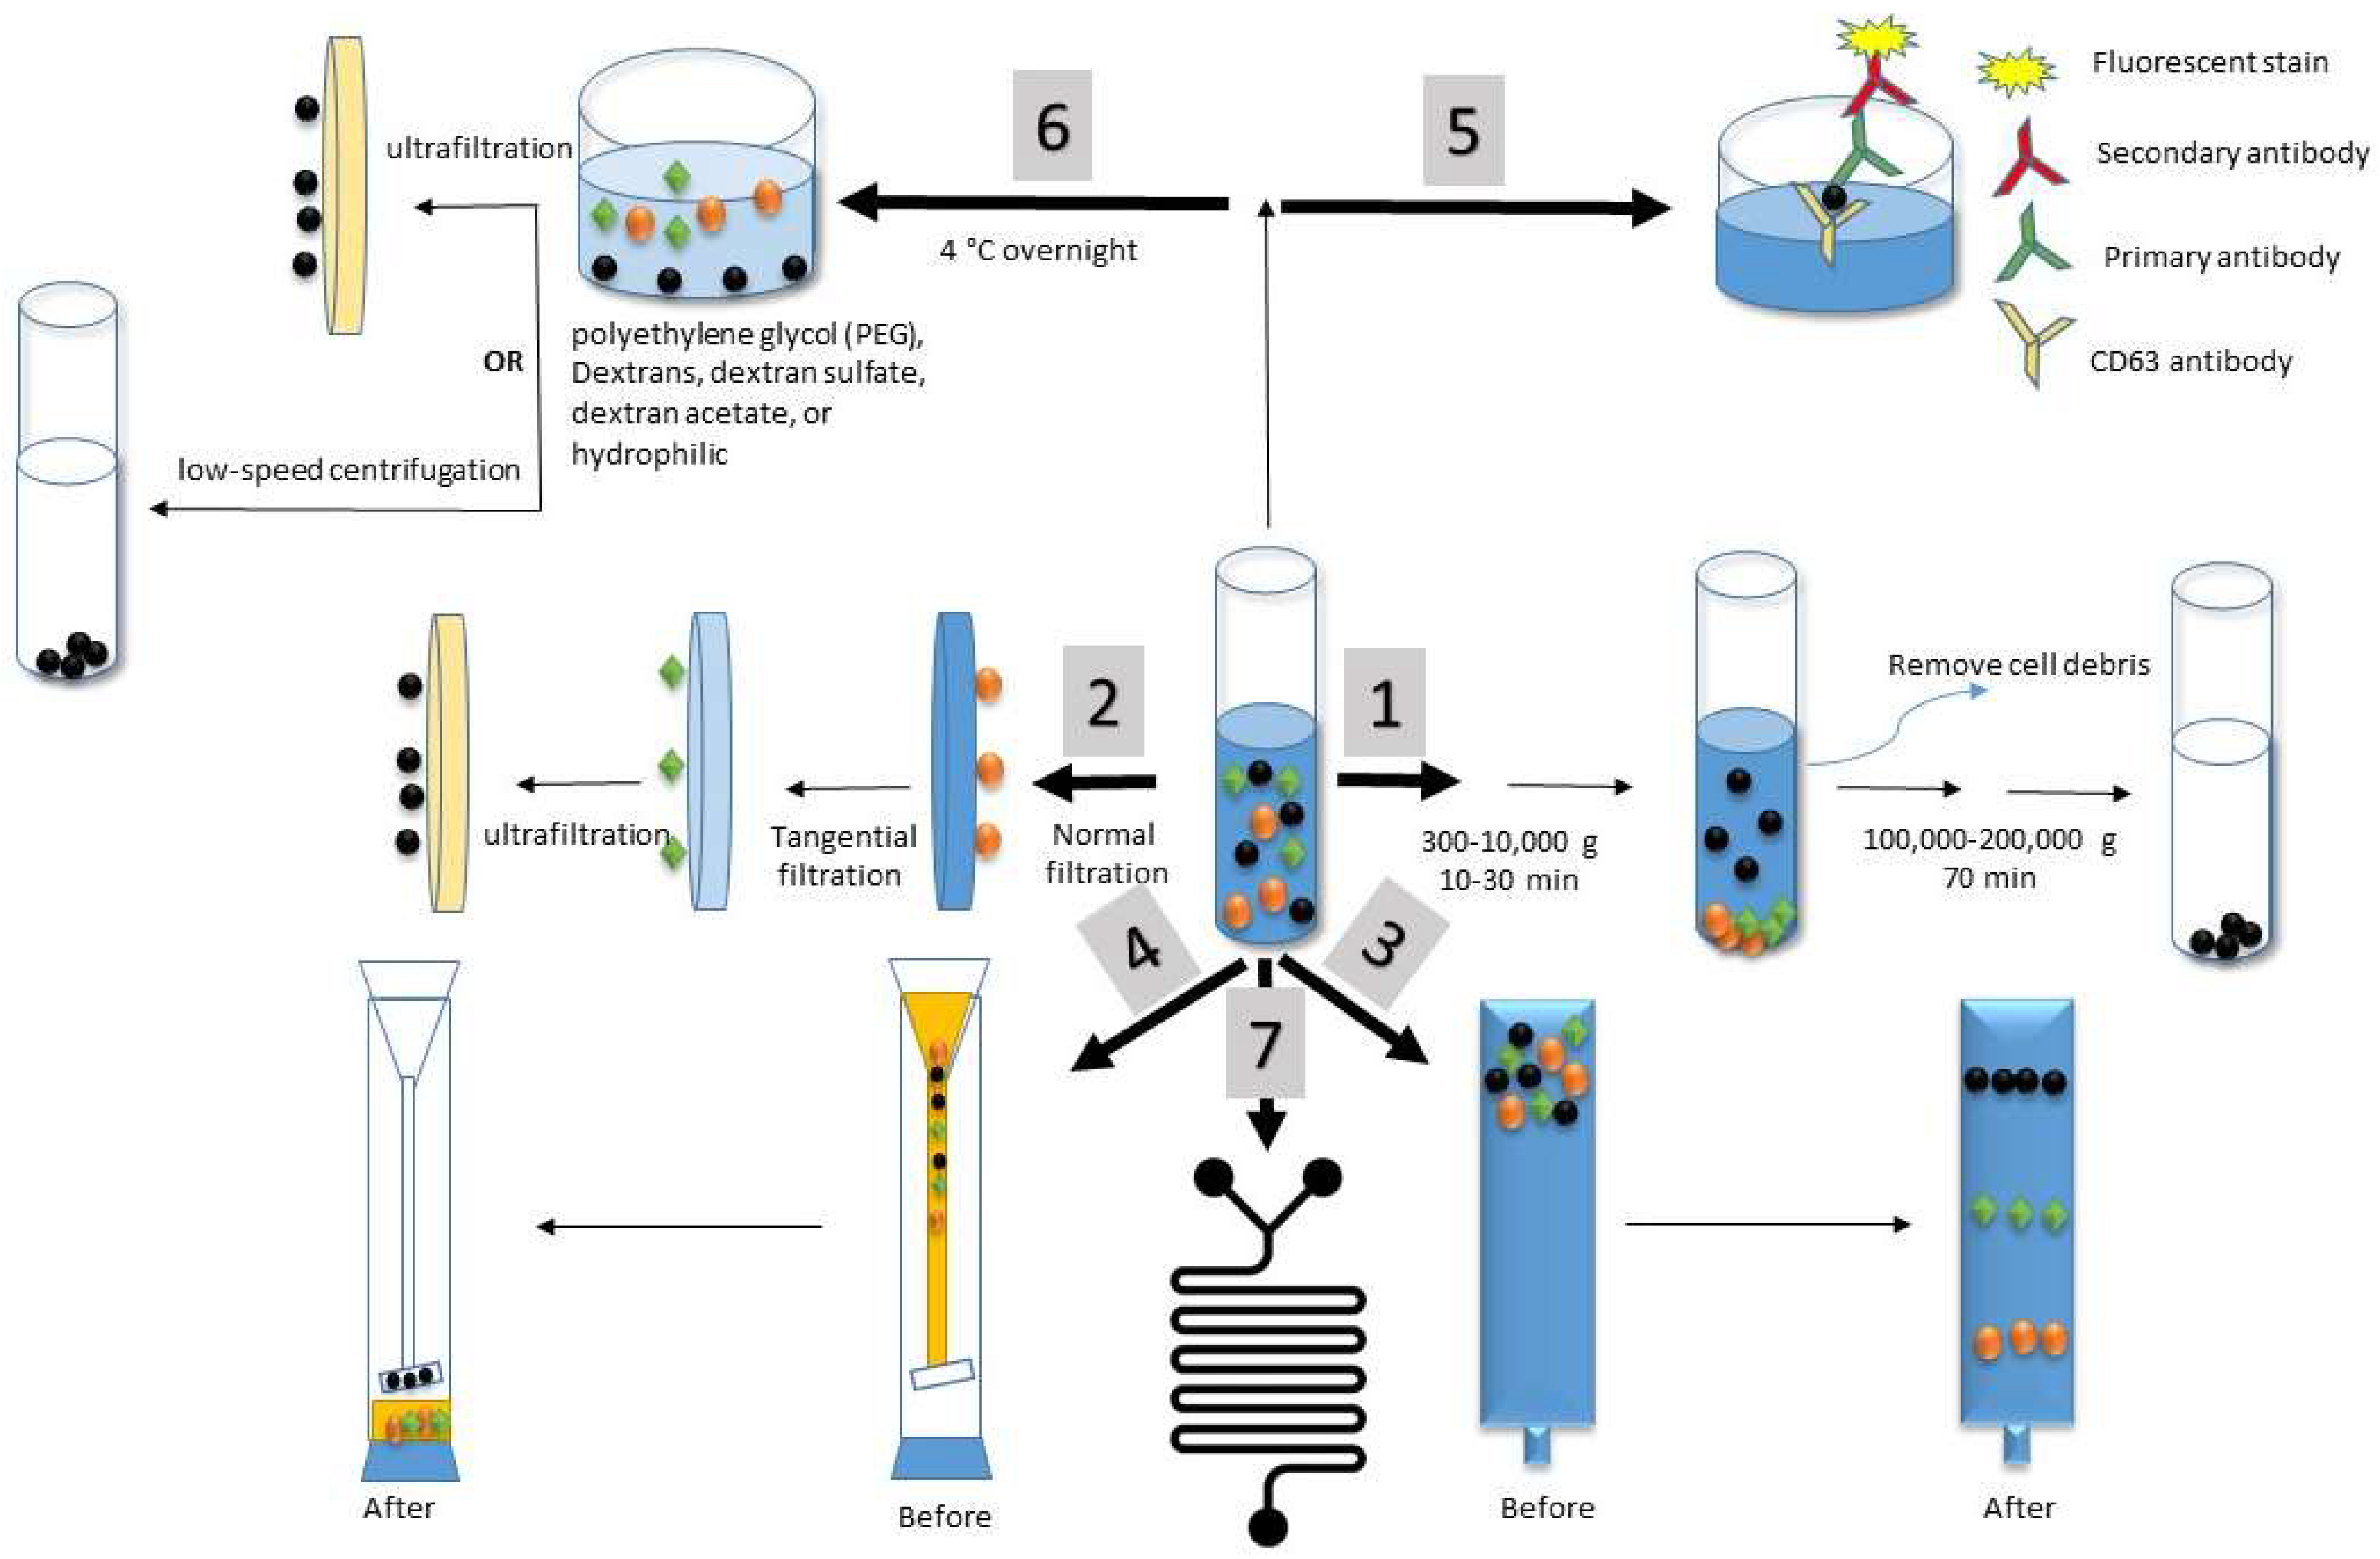 Exosome-templated nanoplasmonics for multiparametric molecular profiling